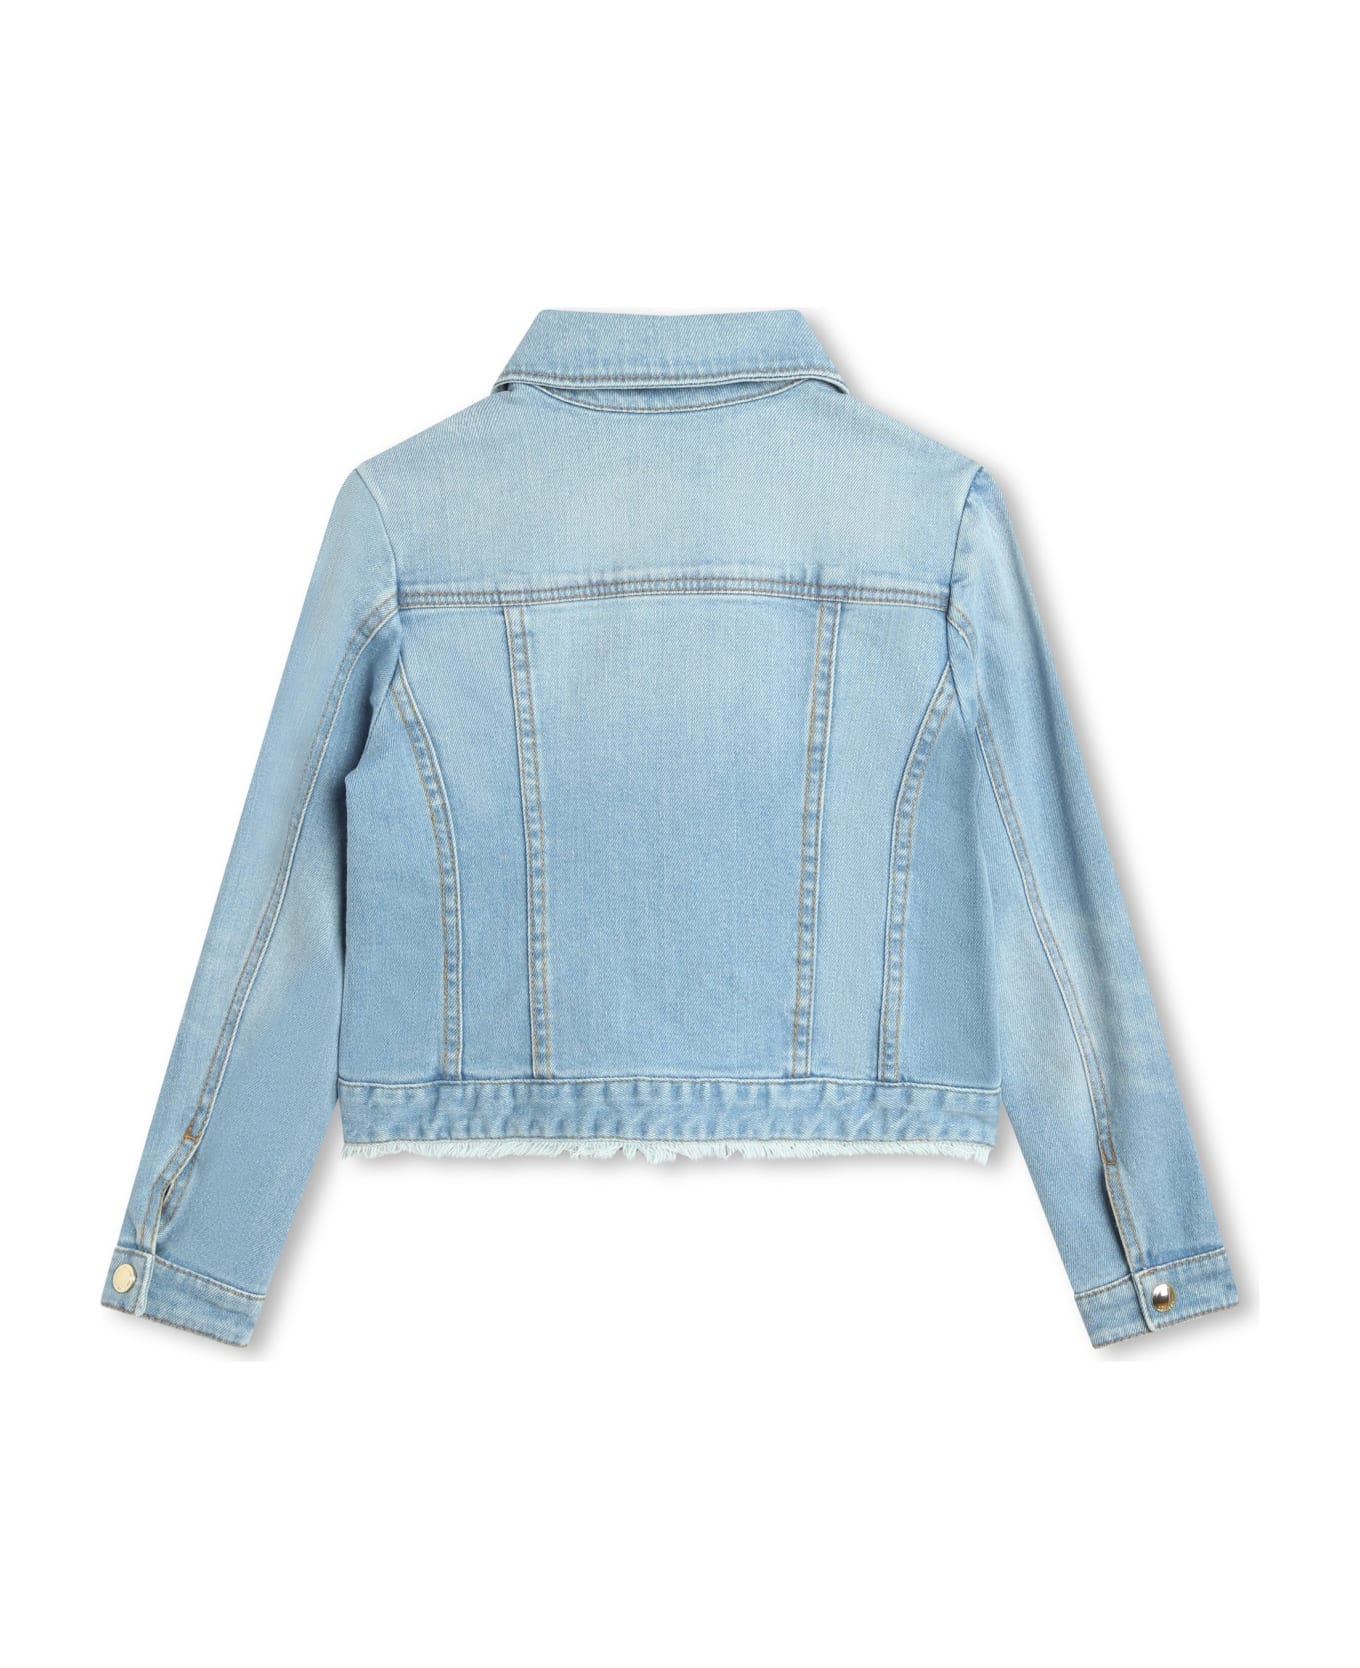 Chloé Denim Jacket With Embroidery - Azzurra